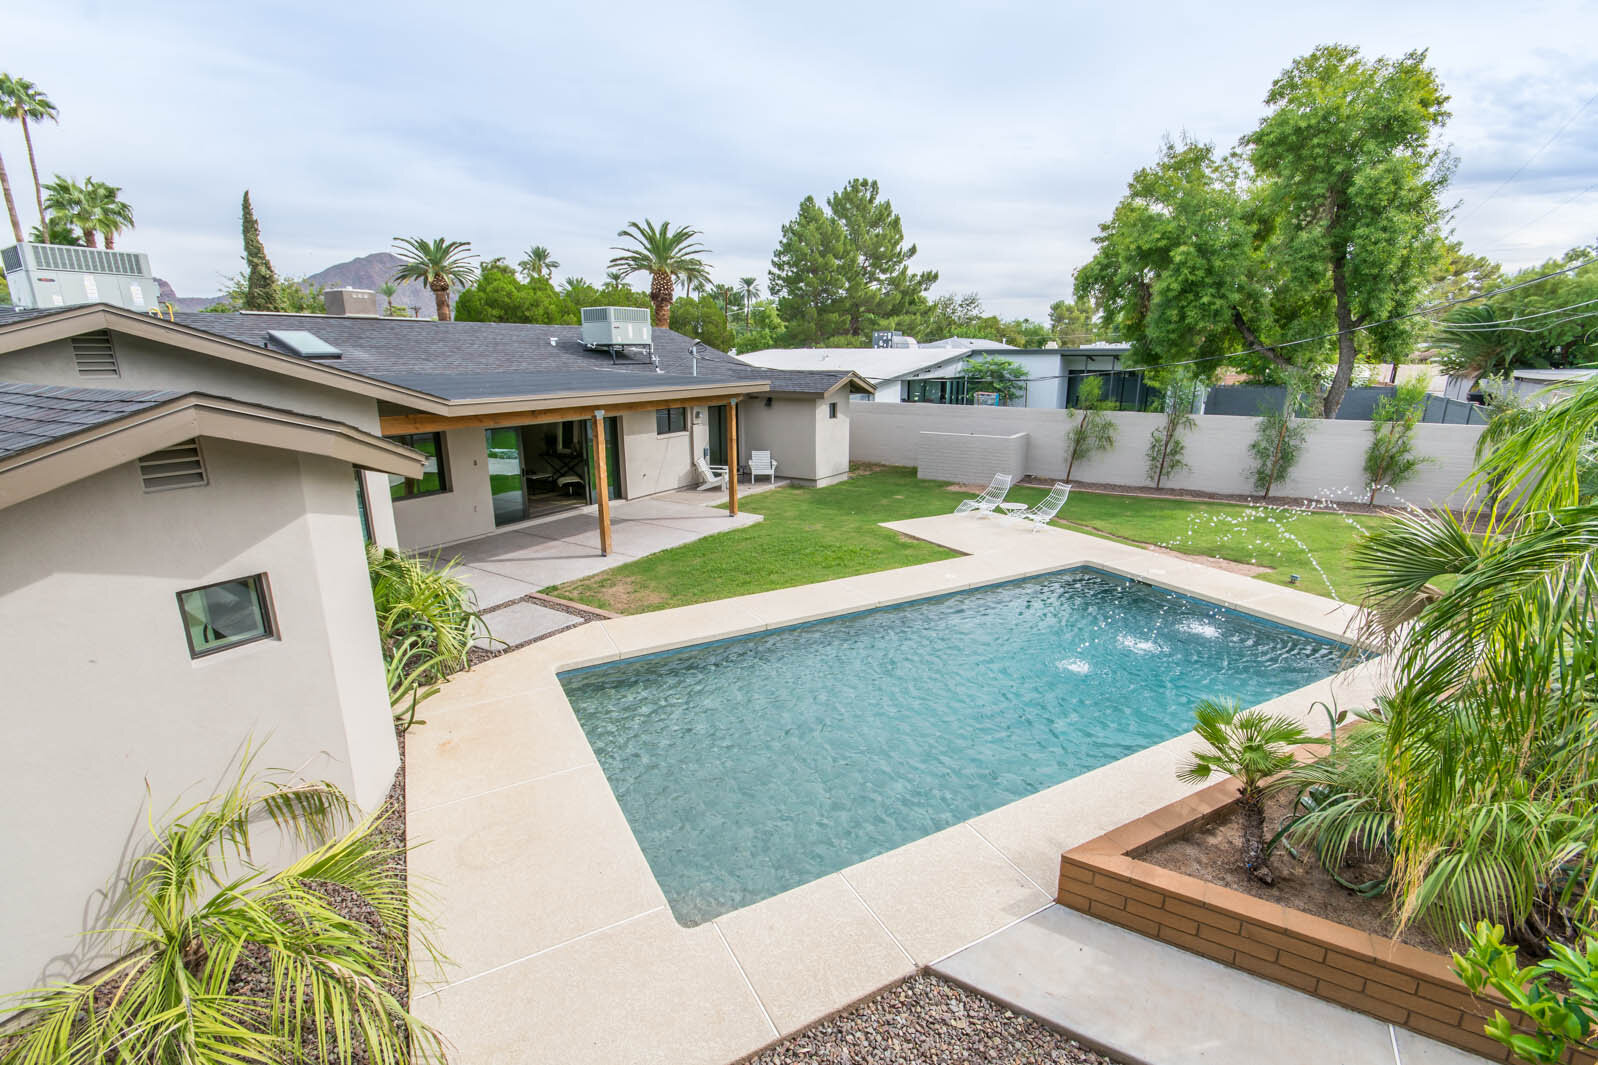 Best-neighborhoods-in-Phoenix-Arcadia-Earll-drive-backyard-pool.JPG